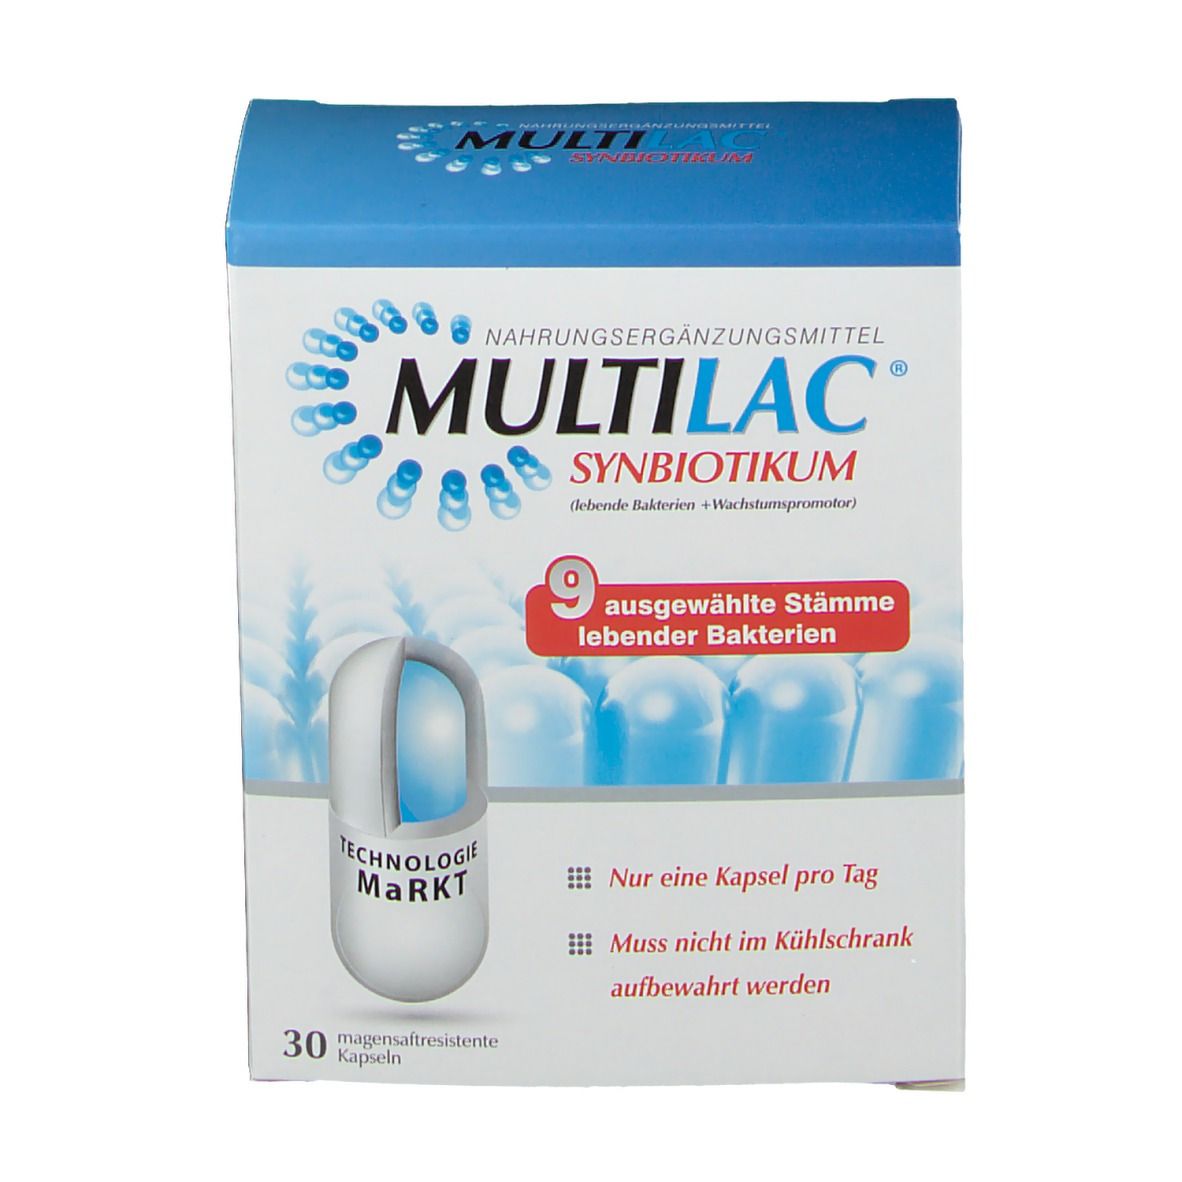 MULTILAC® Synbiotikum